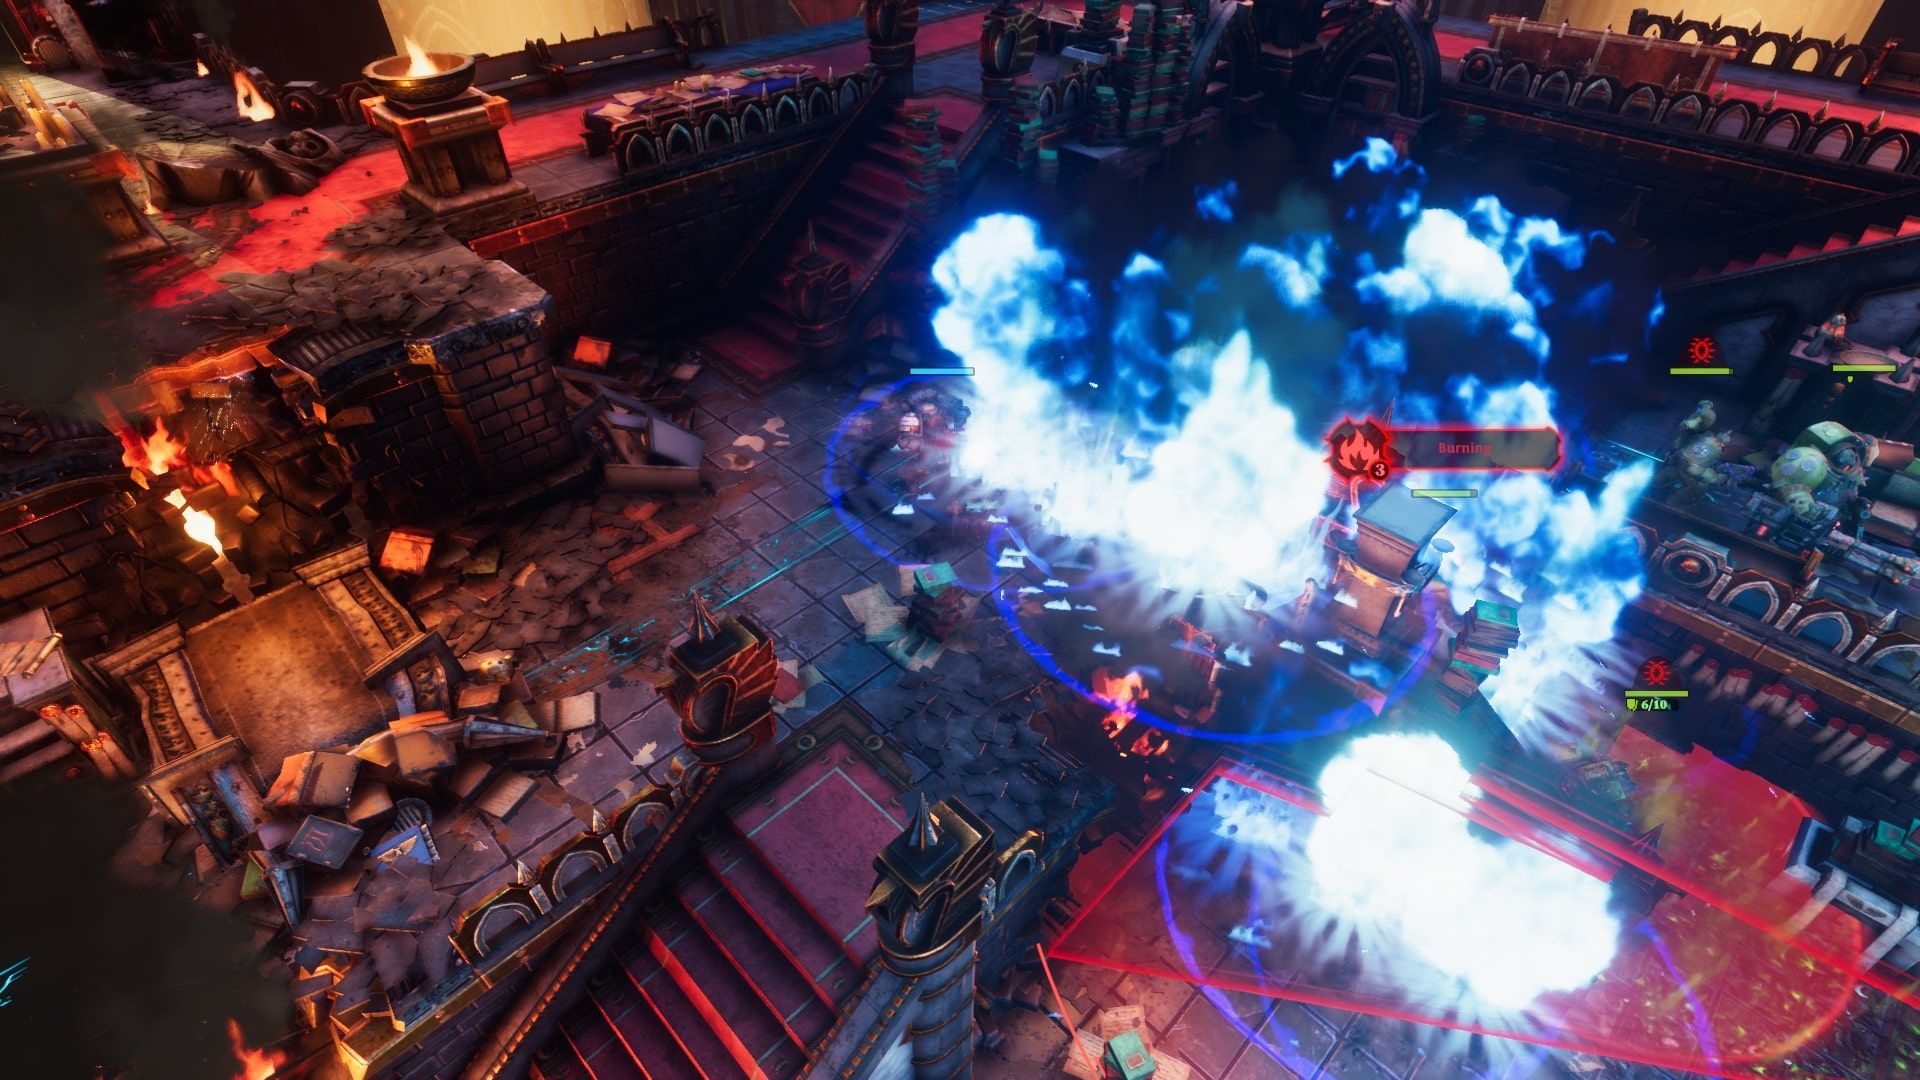 Warhammer 40,000: Chaos Gate - Daemonhunters instal the new